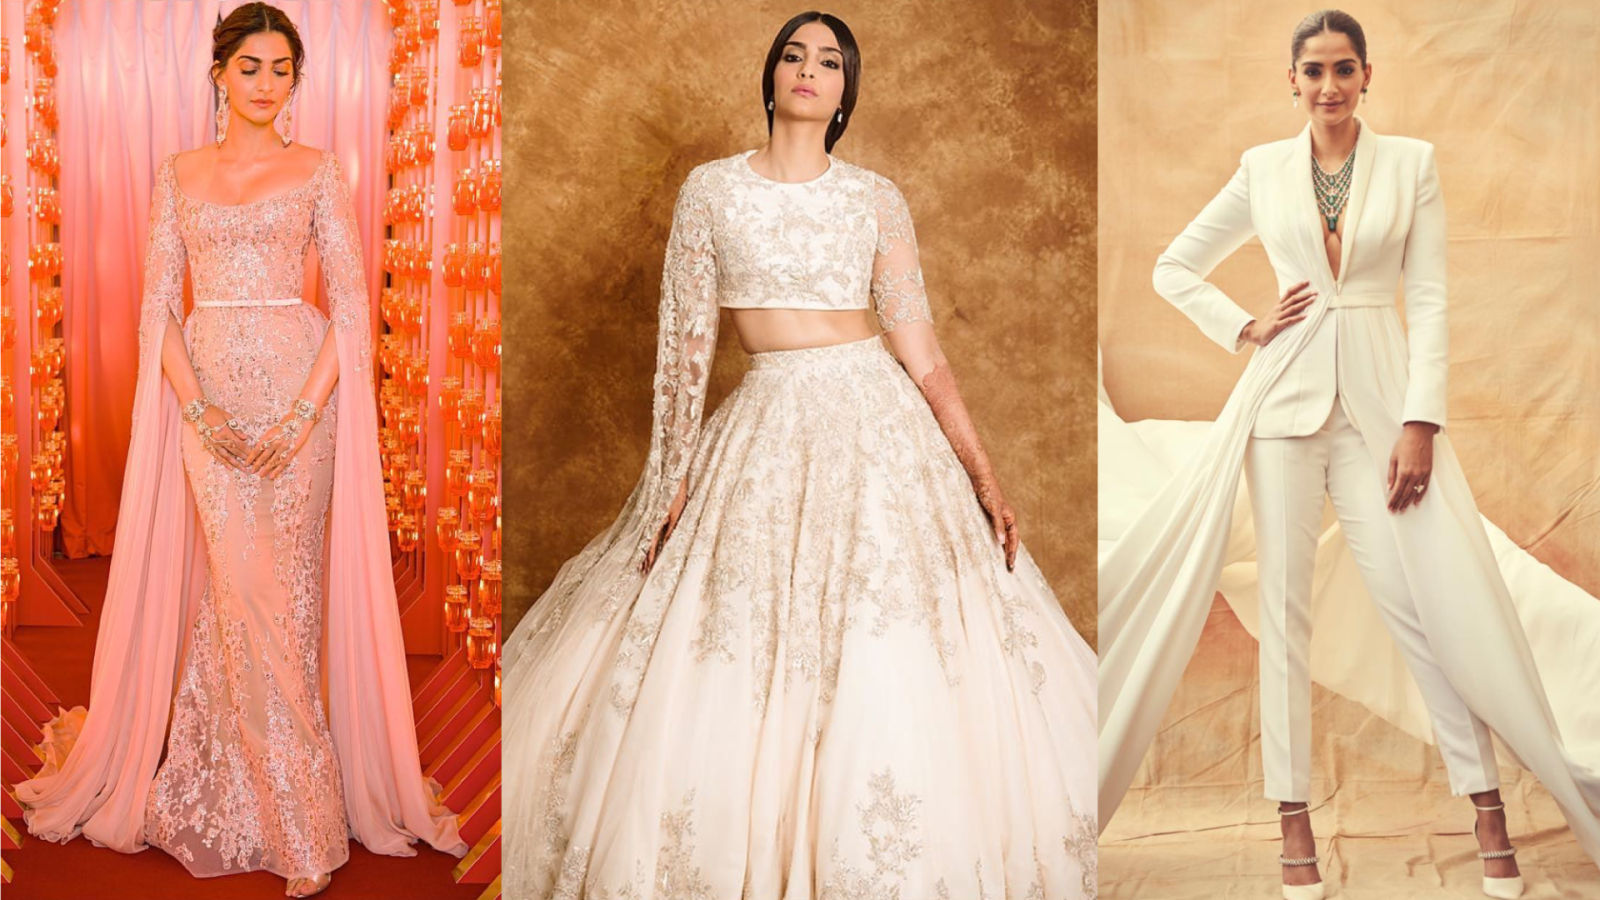 Actress Hot Photos: Sonam Kapoor Hot Pics in White Dress